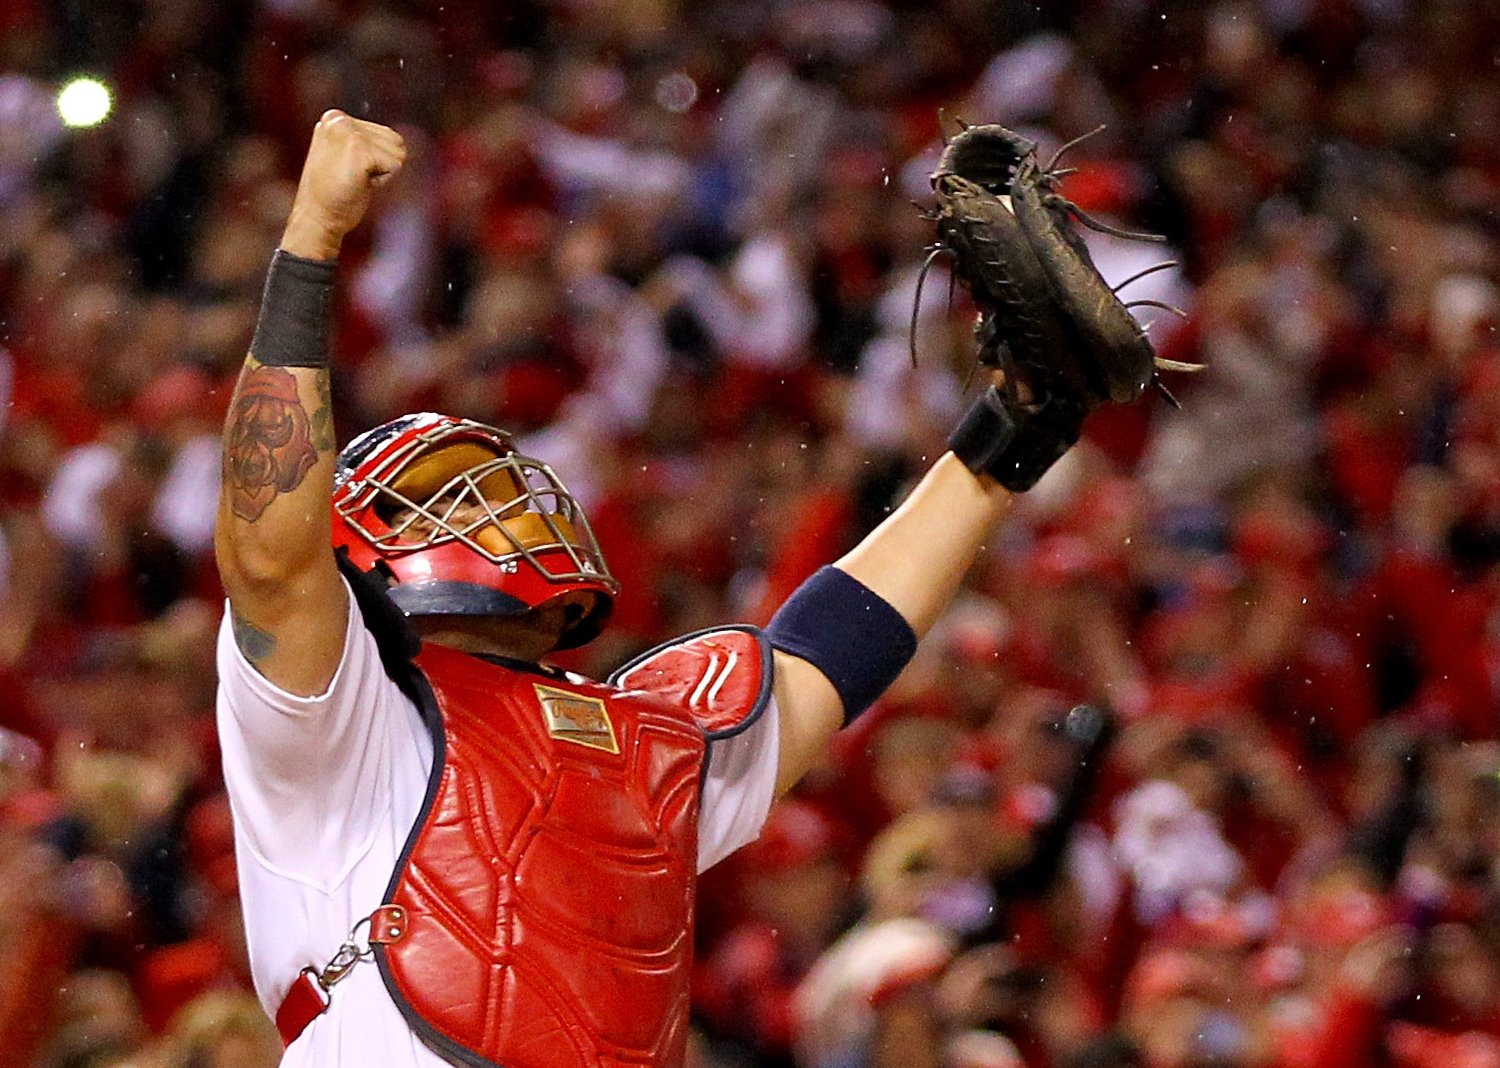 Video, Twitter Reaction to St. Louis Cardinals Celebrating World Series Trip | Bleacher Report